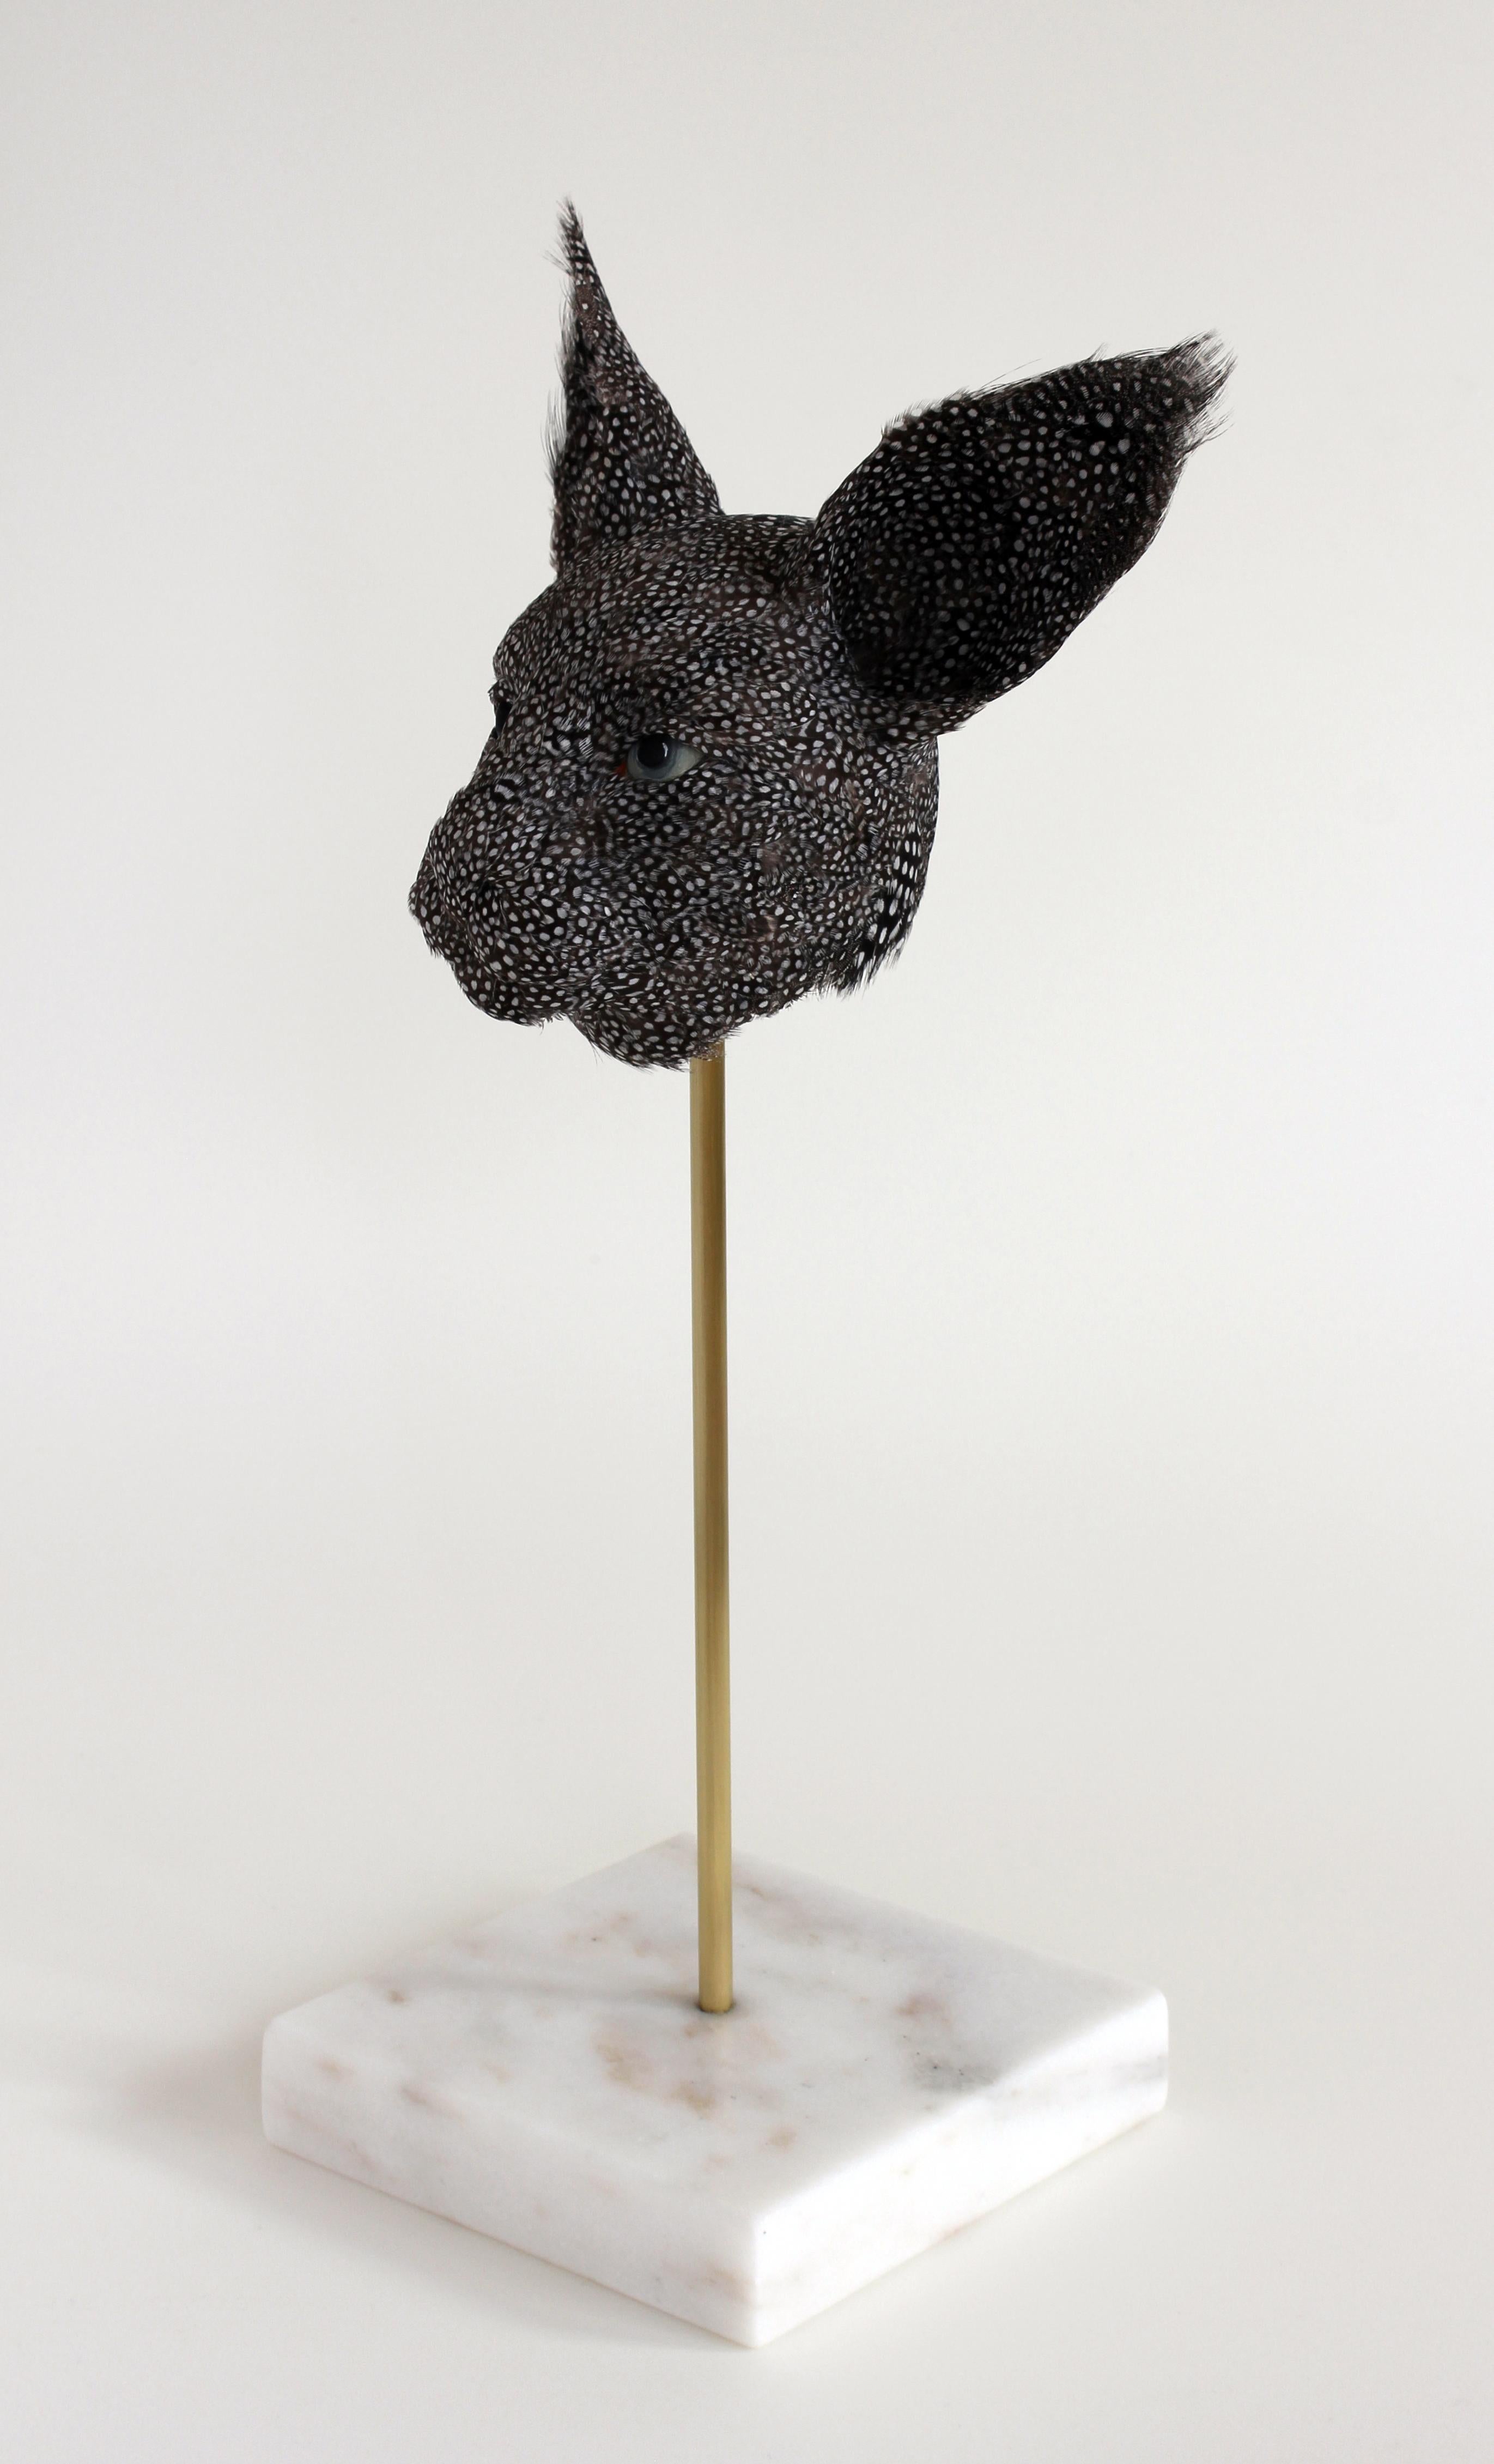 Lindsay Pichaske Figurative Sculpture - "Cleo" Contemporary, Ceramic, Mixed Media, Sculpture, Marble Base, Brass Rod